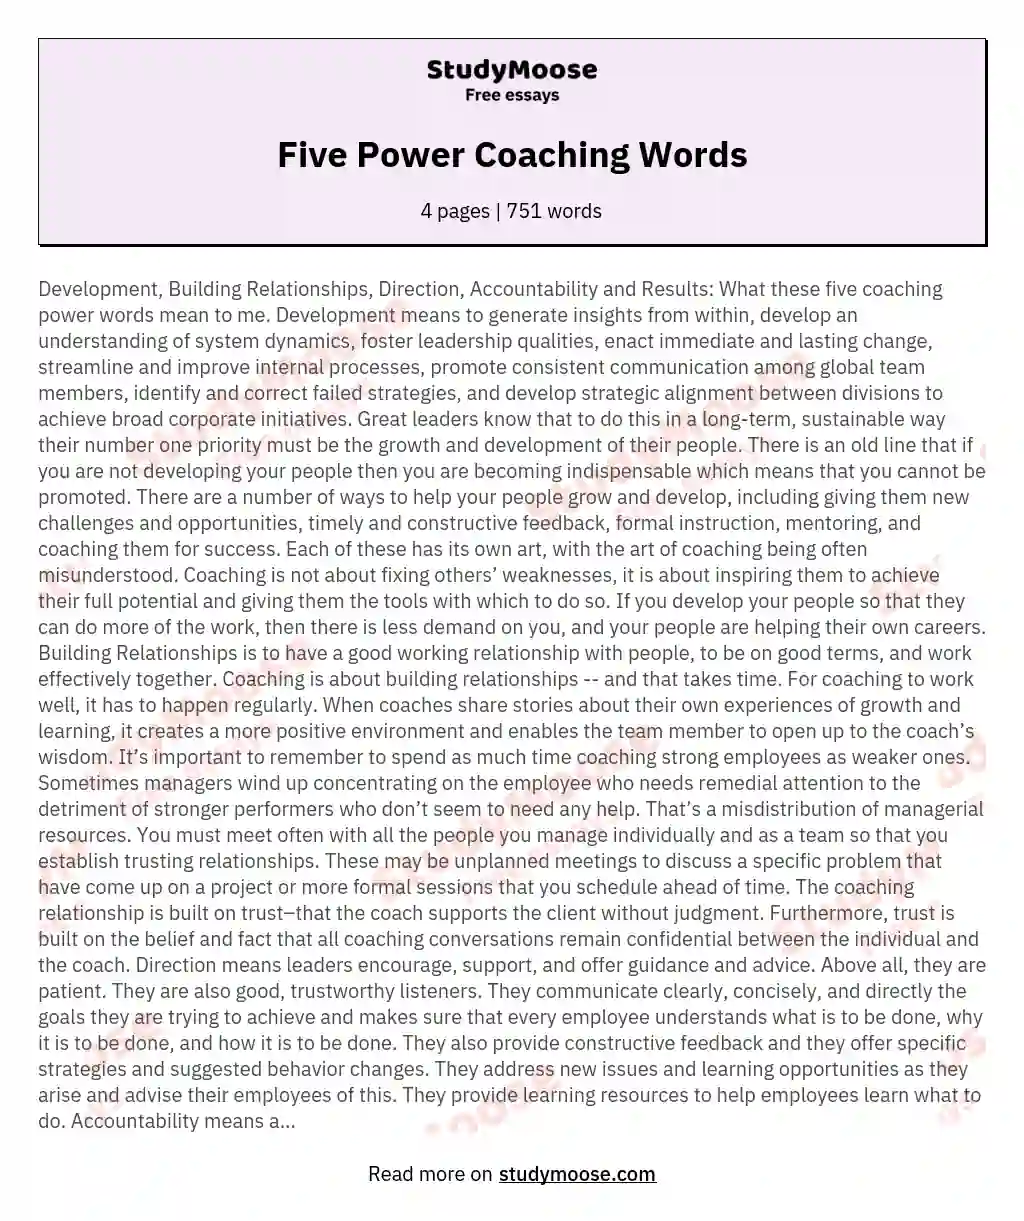 Five Power Coaching Words essay